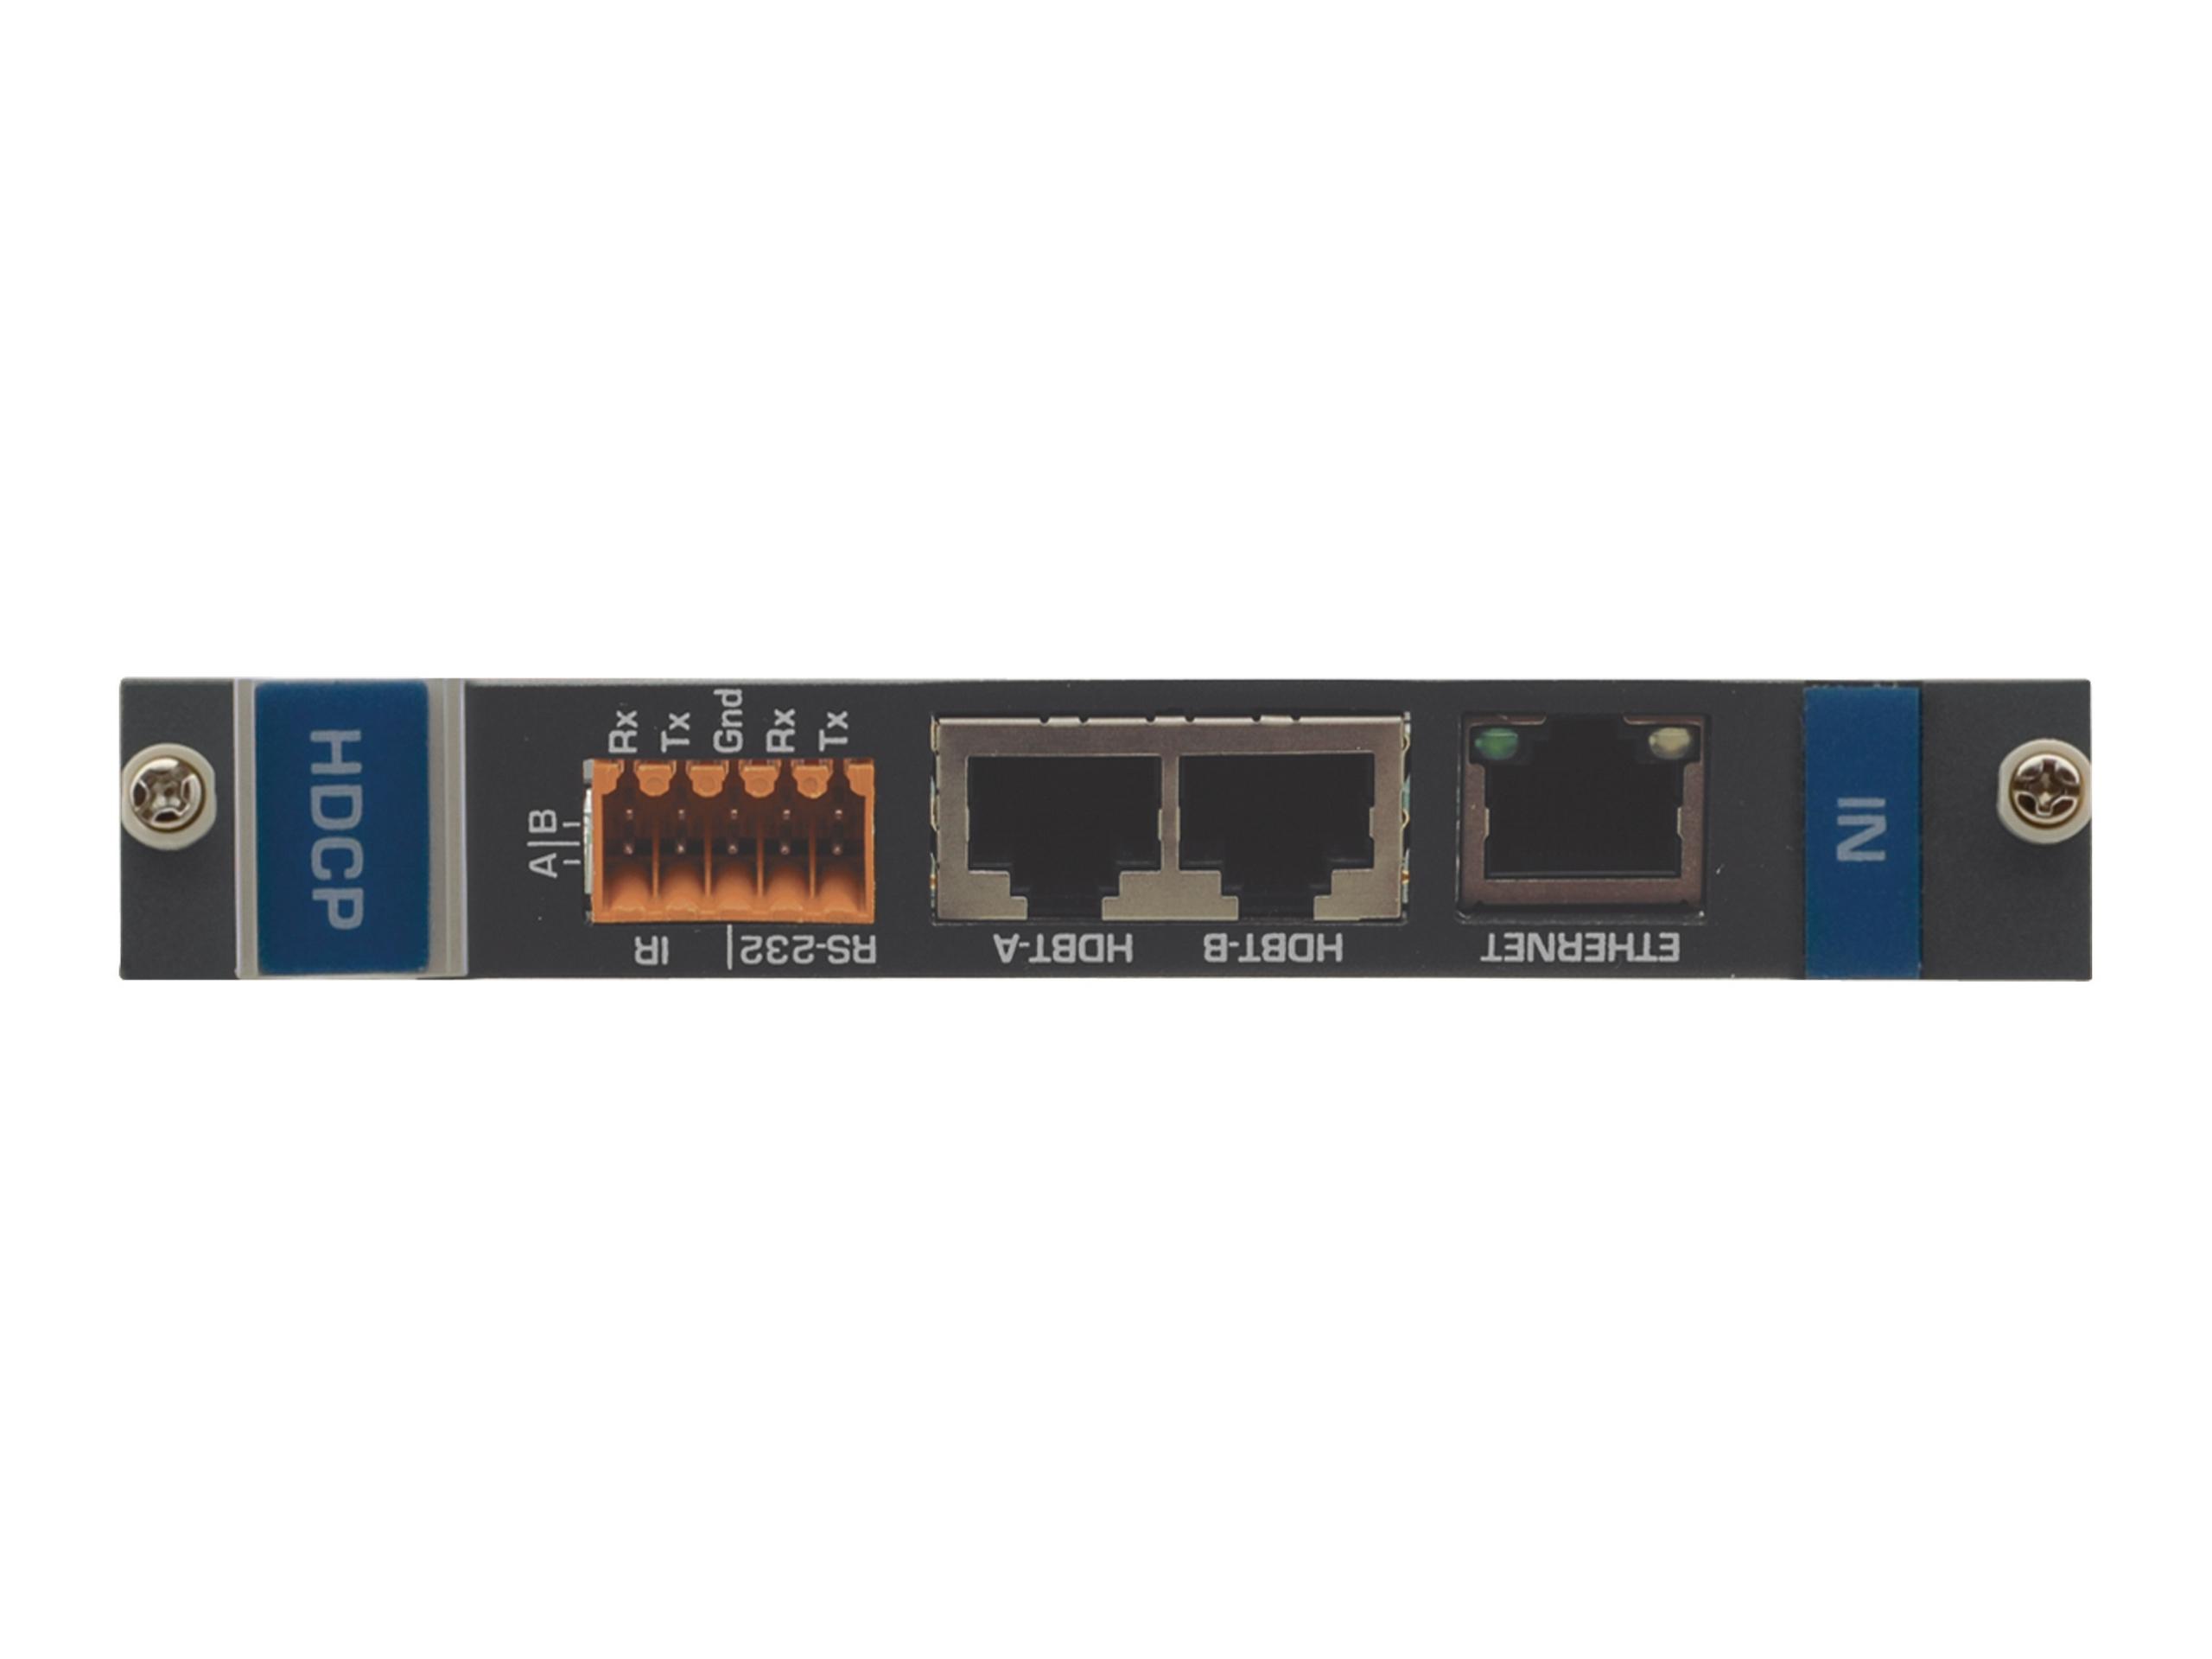 HDBT-IN2-F16 2-Input HDMI over HDBaseT Card (F-16) by Kramer